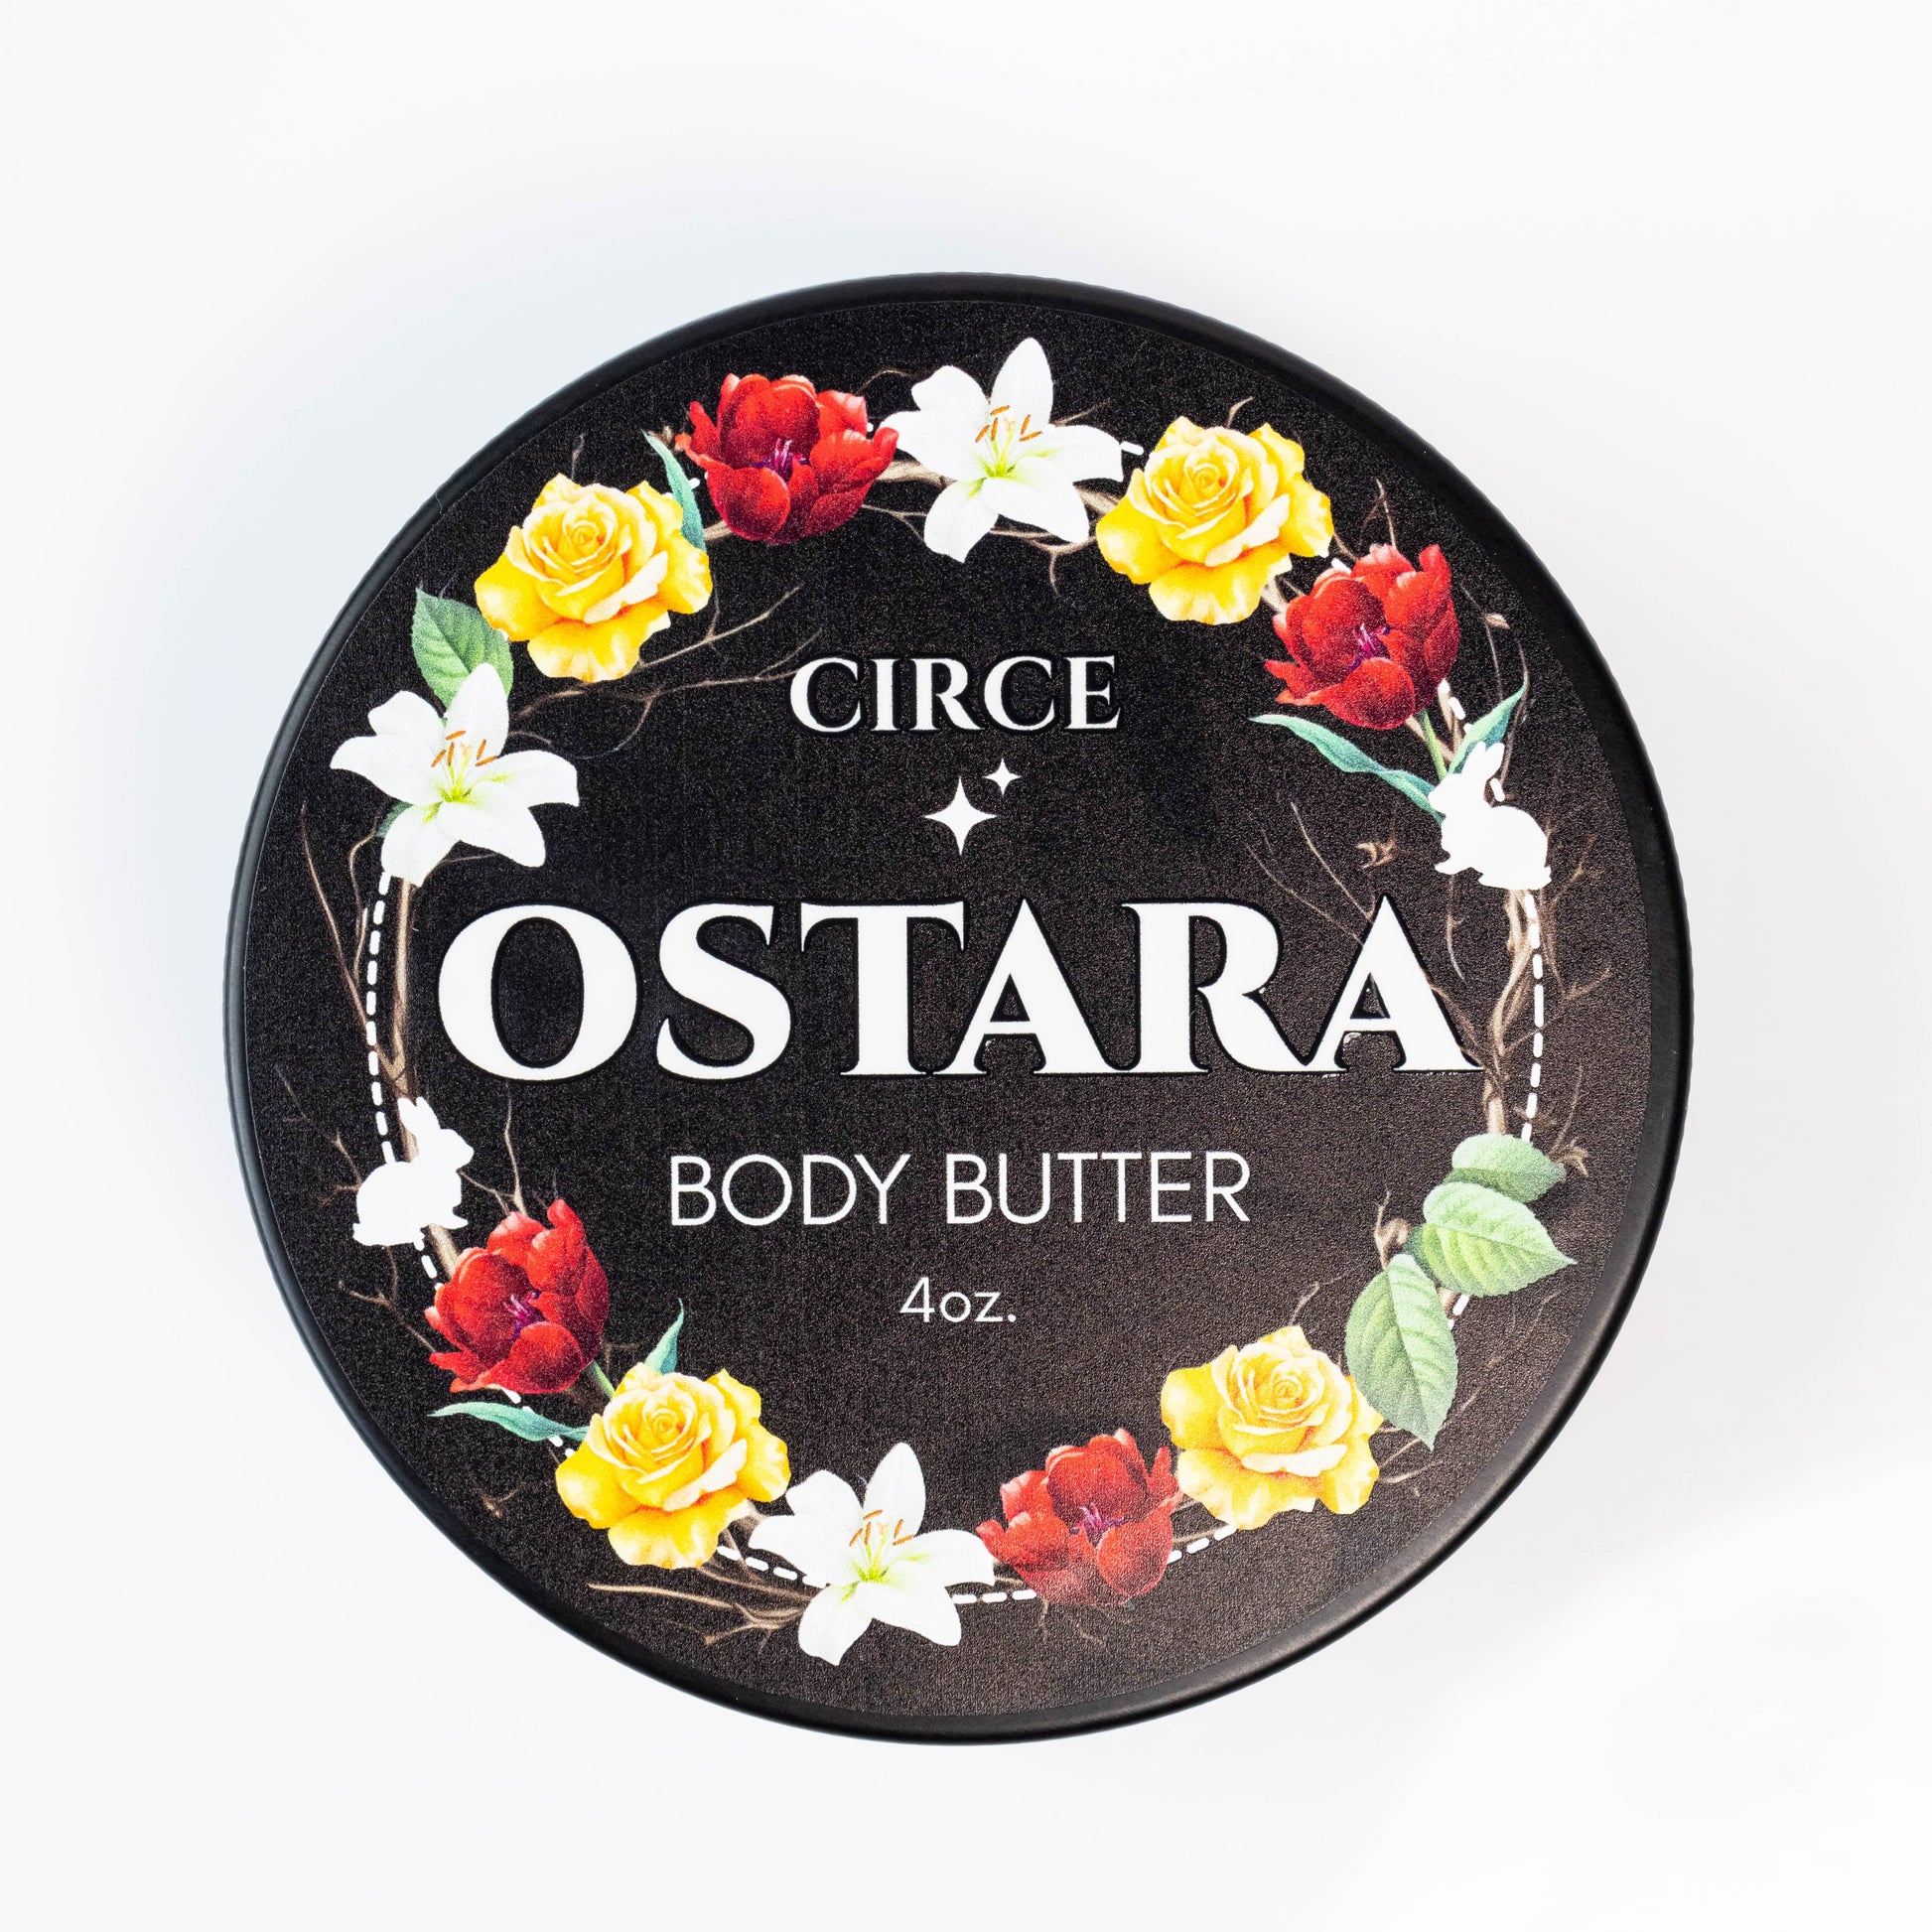 CIRCE Ostara Body Butter - FaWholesales  from Circe Boutique